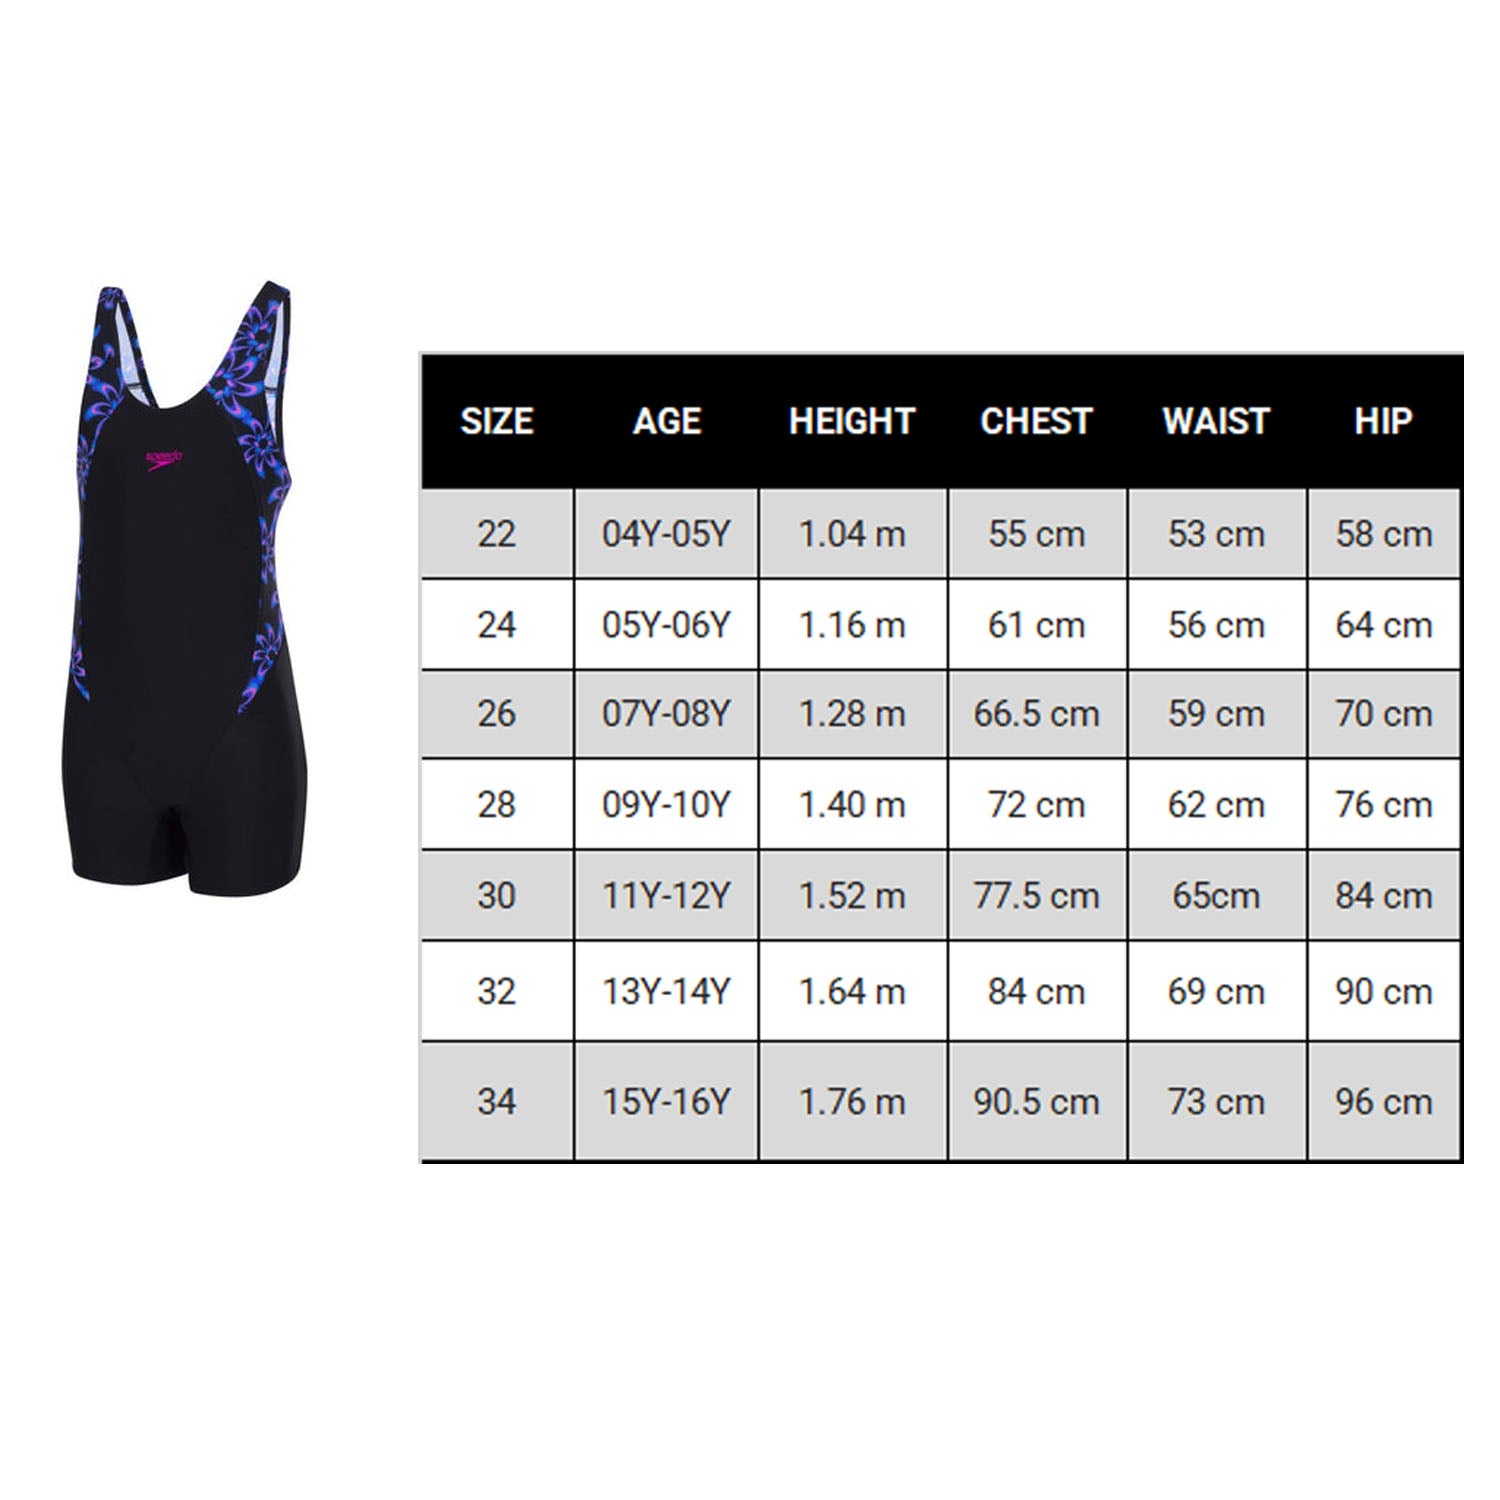 Speedo Girls Swimwear Boom Splice Legsuit (Black and Electric Pink) - Best Price online Prokicksports.com